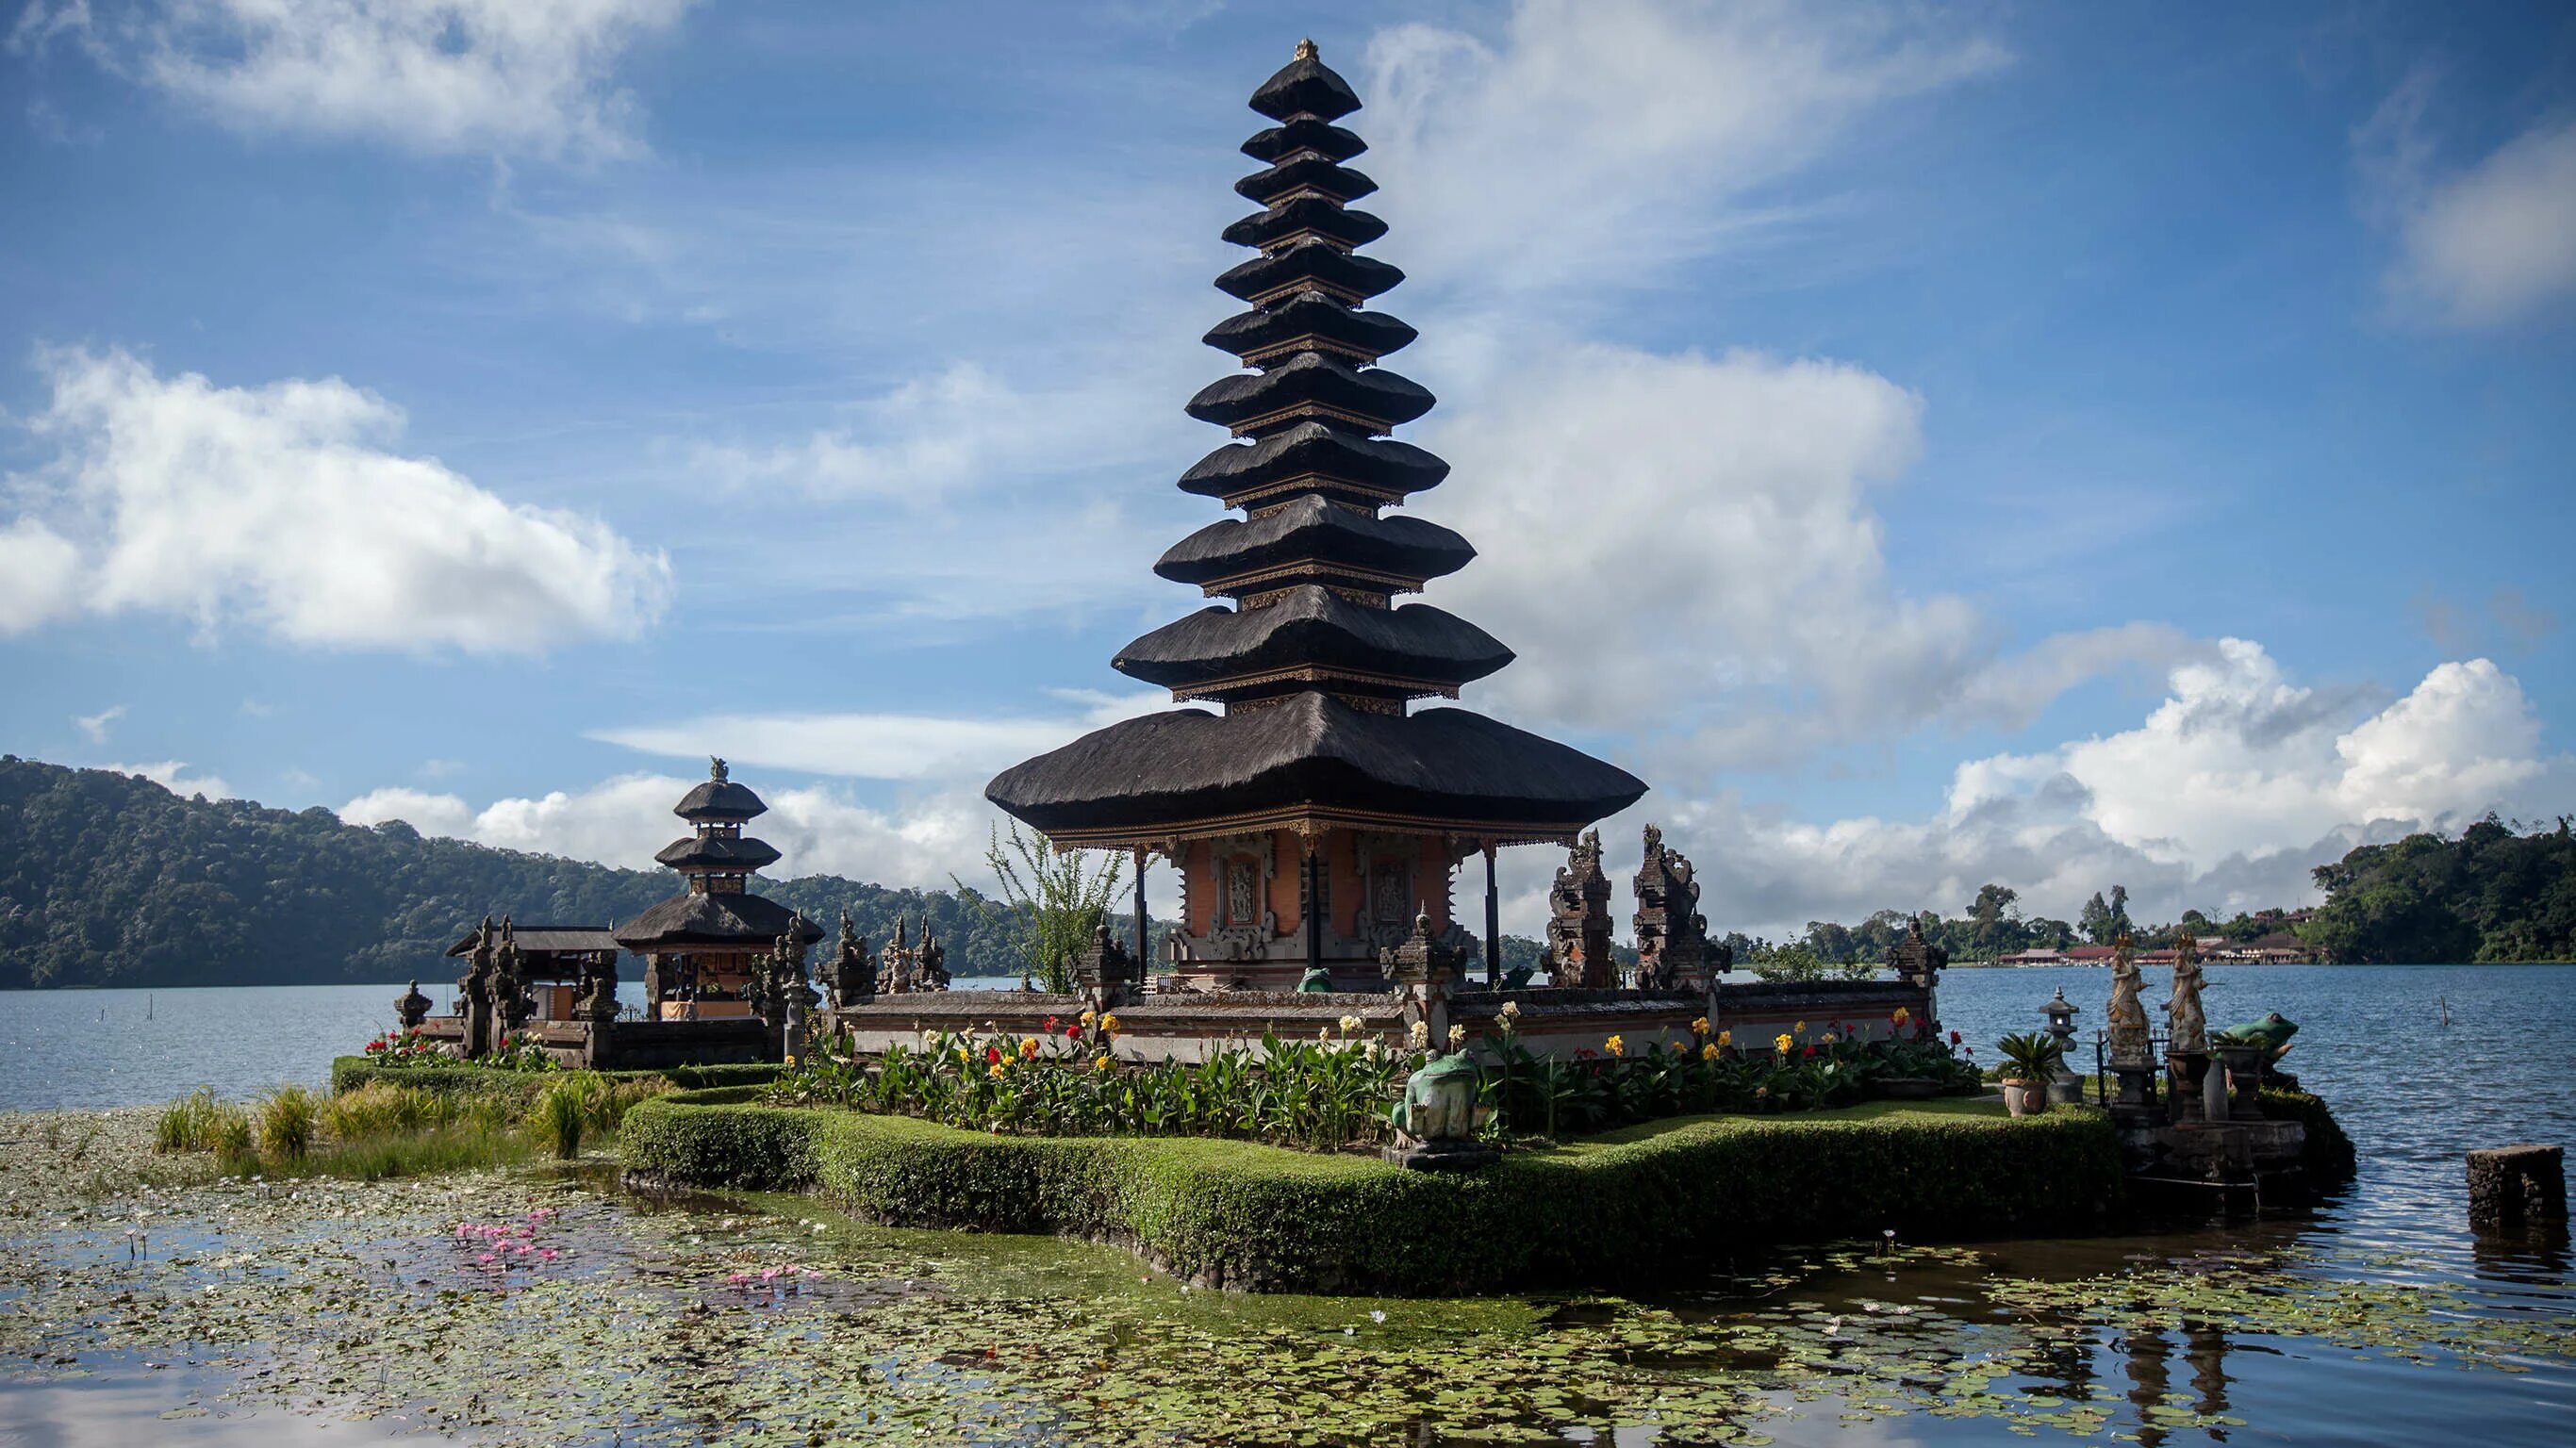 Храм улун дану Батур. Индонезия Бали. Бали и Ломбок. Генггонг (Бали). Камеры бали